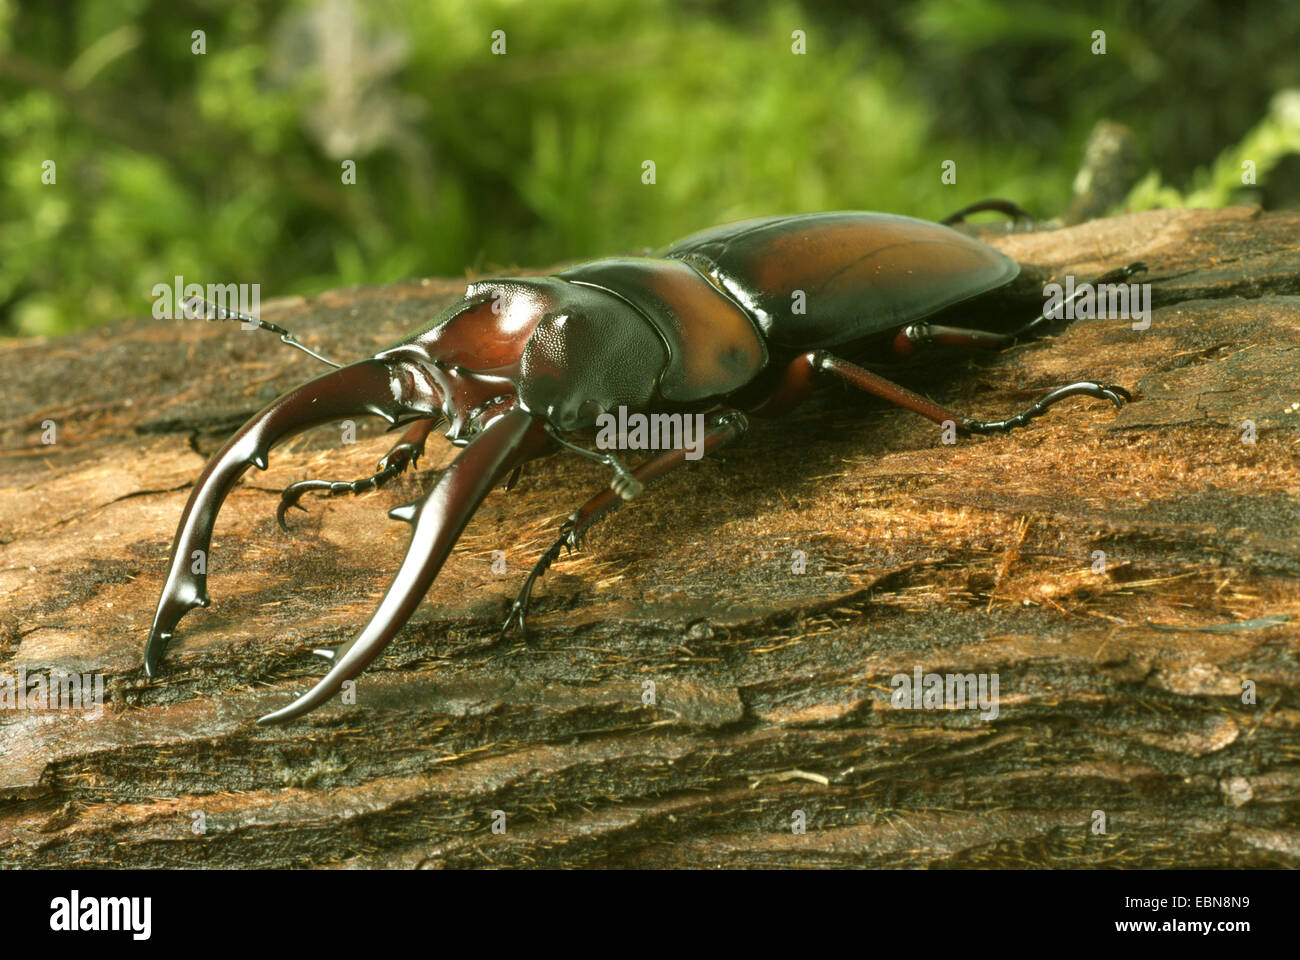 Stag beetle (Prosopocoilus mirabilis), maschio, vista da vicino Foto Stock